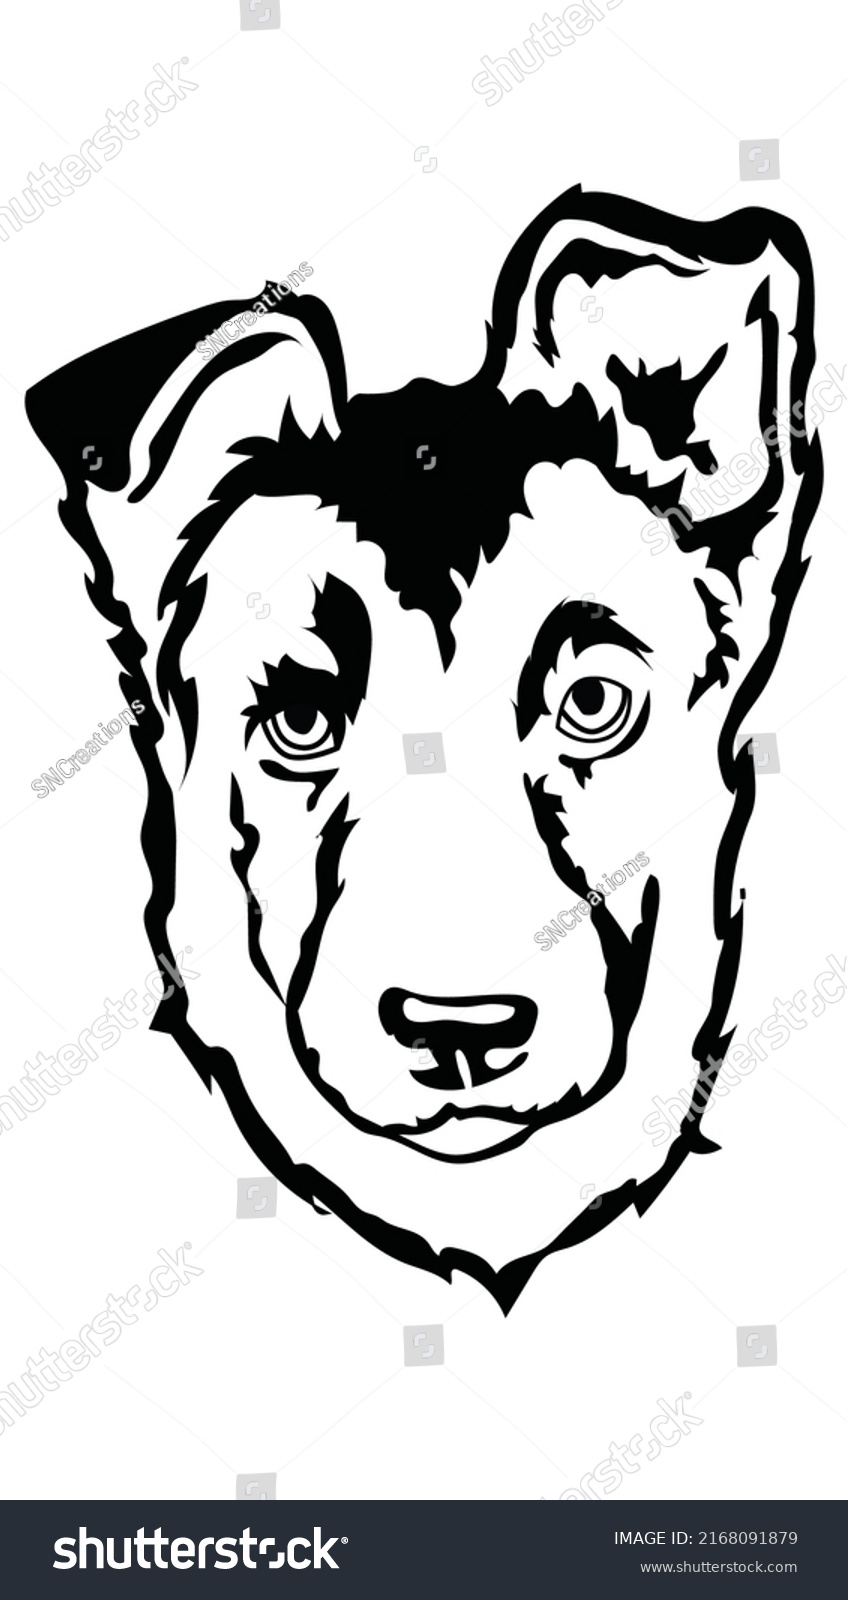 SVG of German Shepherd vector illustration. Illustration for cutting, vinyl decal, sticker print for t shirts. svg